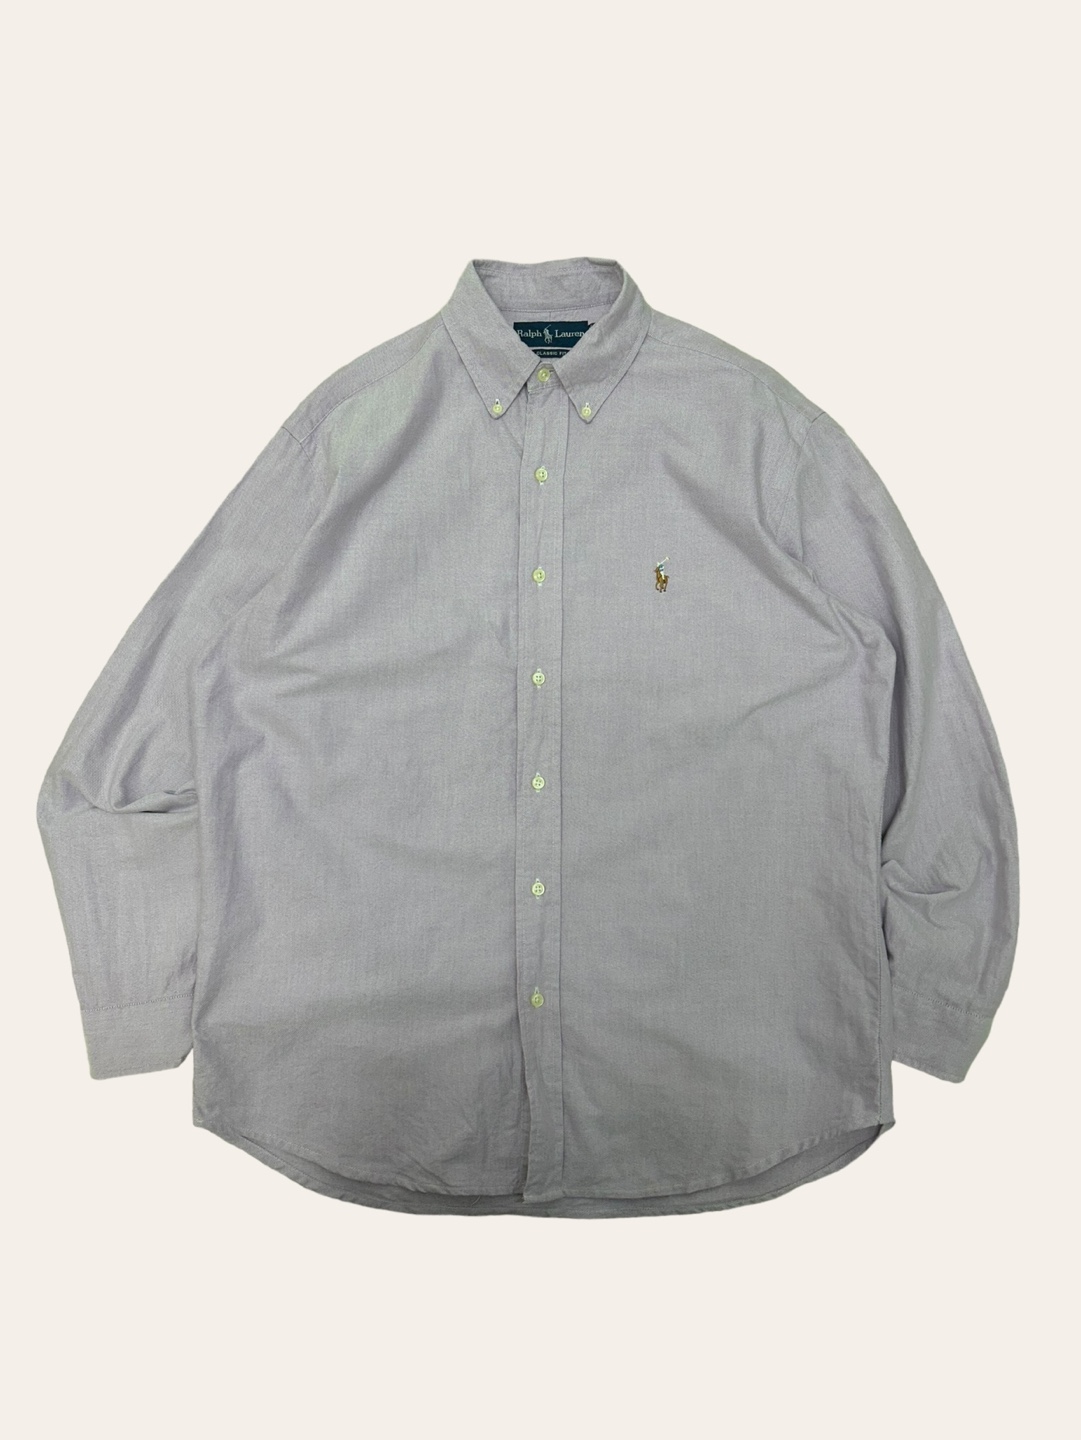 (From USA)Polo ralph lauren purple oxford shirt 15.5